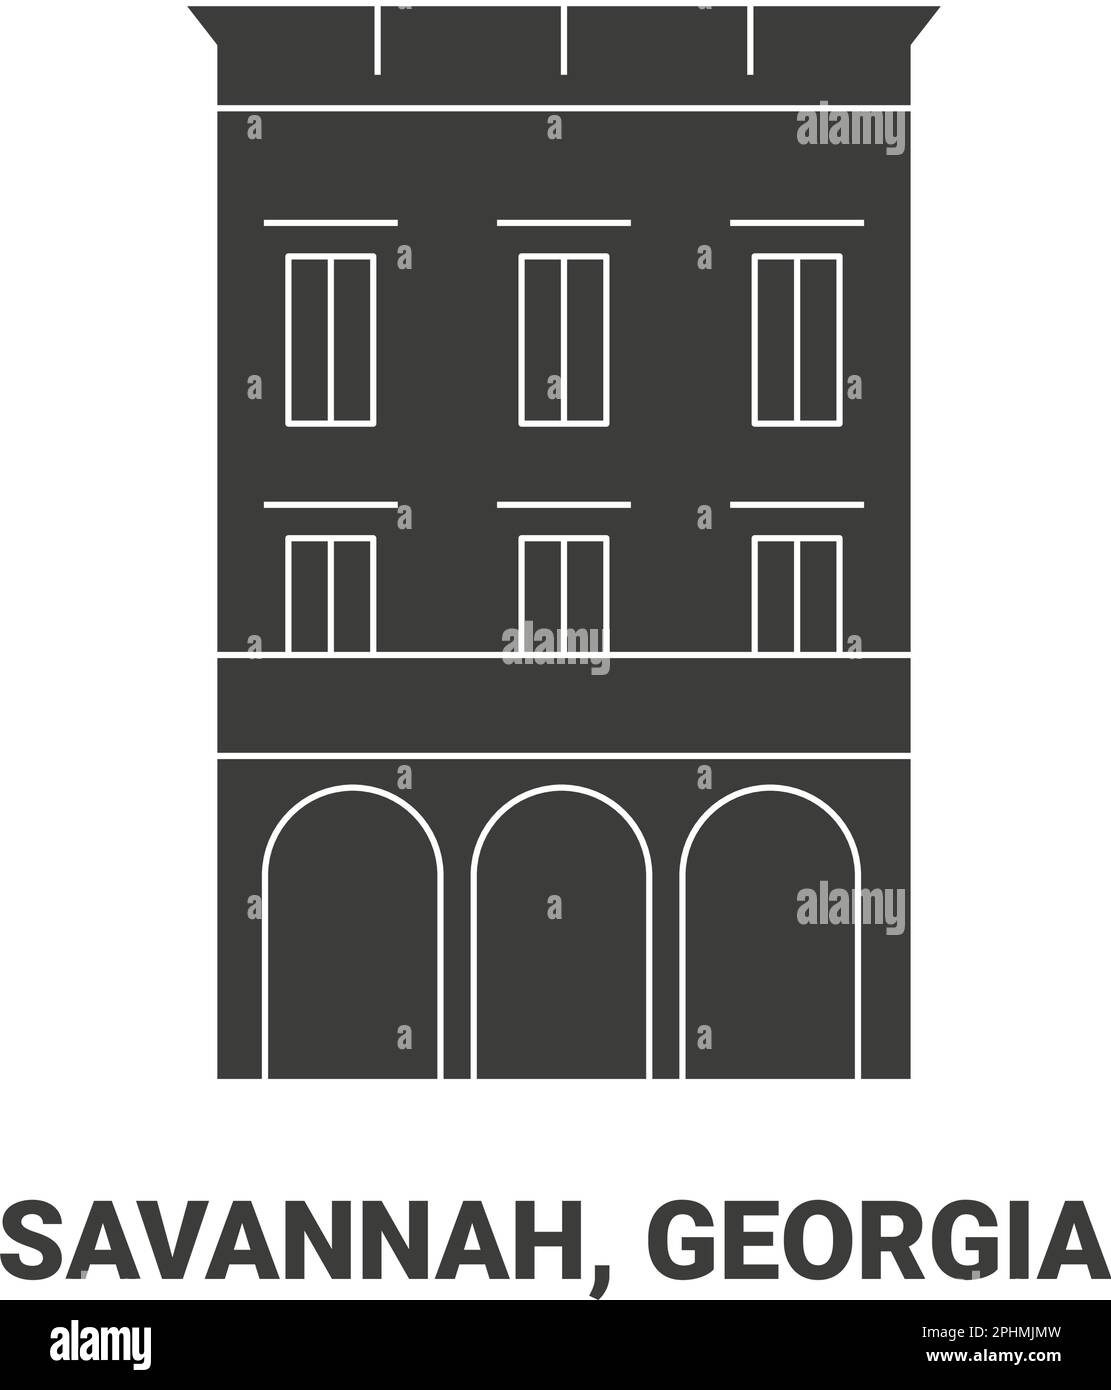 Vektorgrafik für Reisen in die USA, Savannah, Georgia Stock Vektor